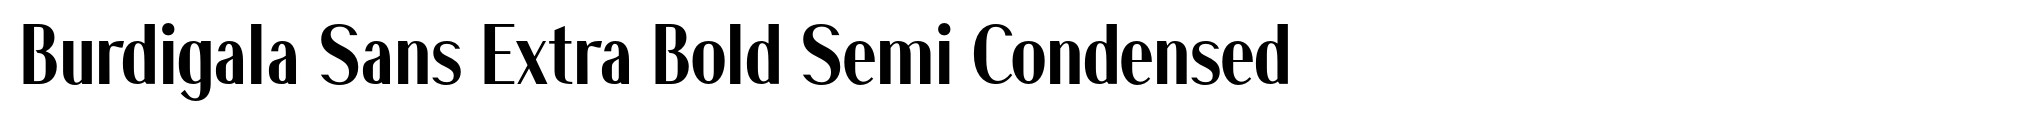 Burdigala Sans Extra Bold Semi Condensed image